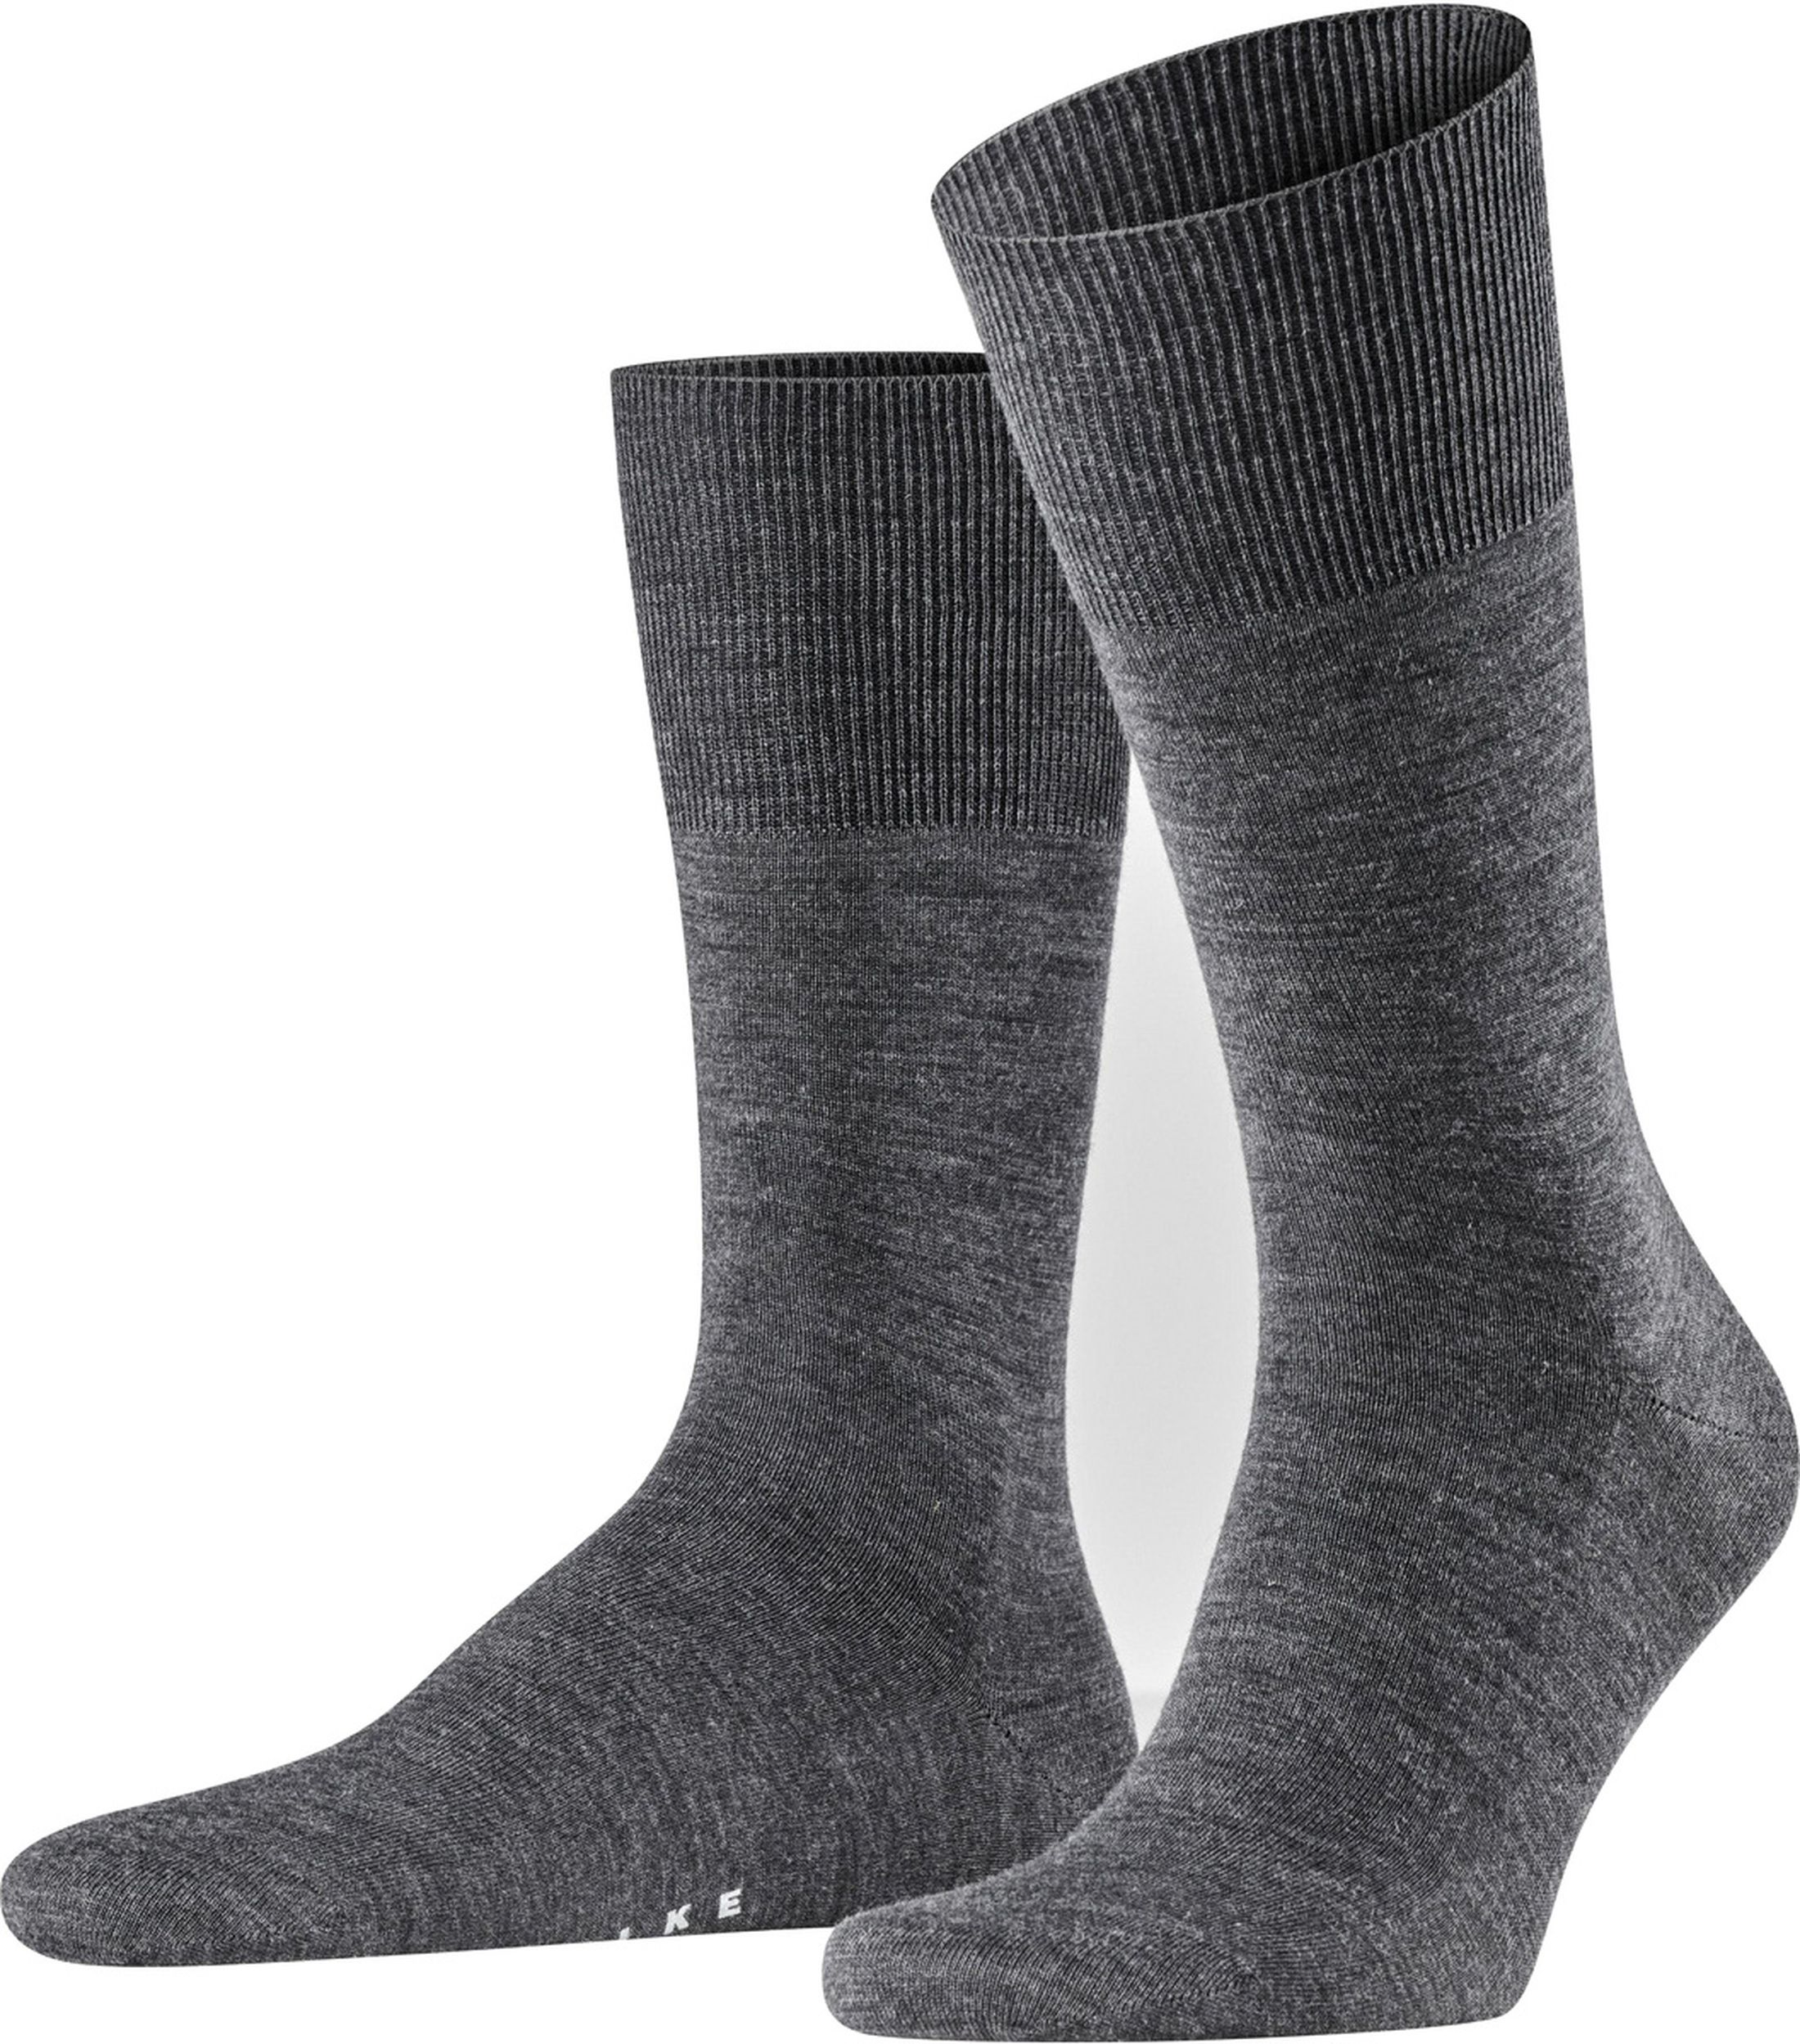 Falke Airport Socks Asphalt 3180 Dark Grey Grey size 41-42